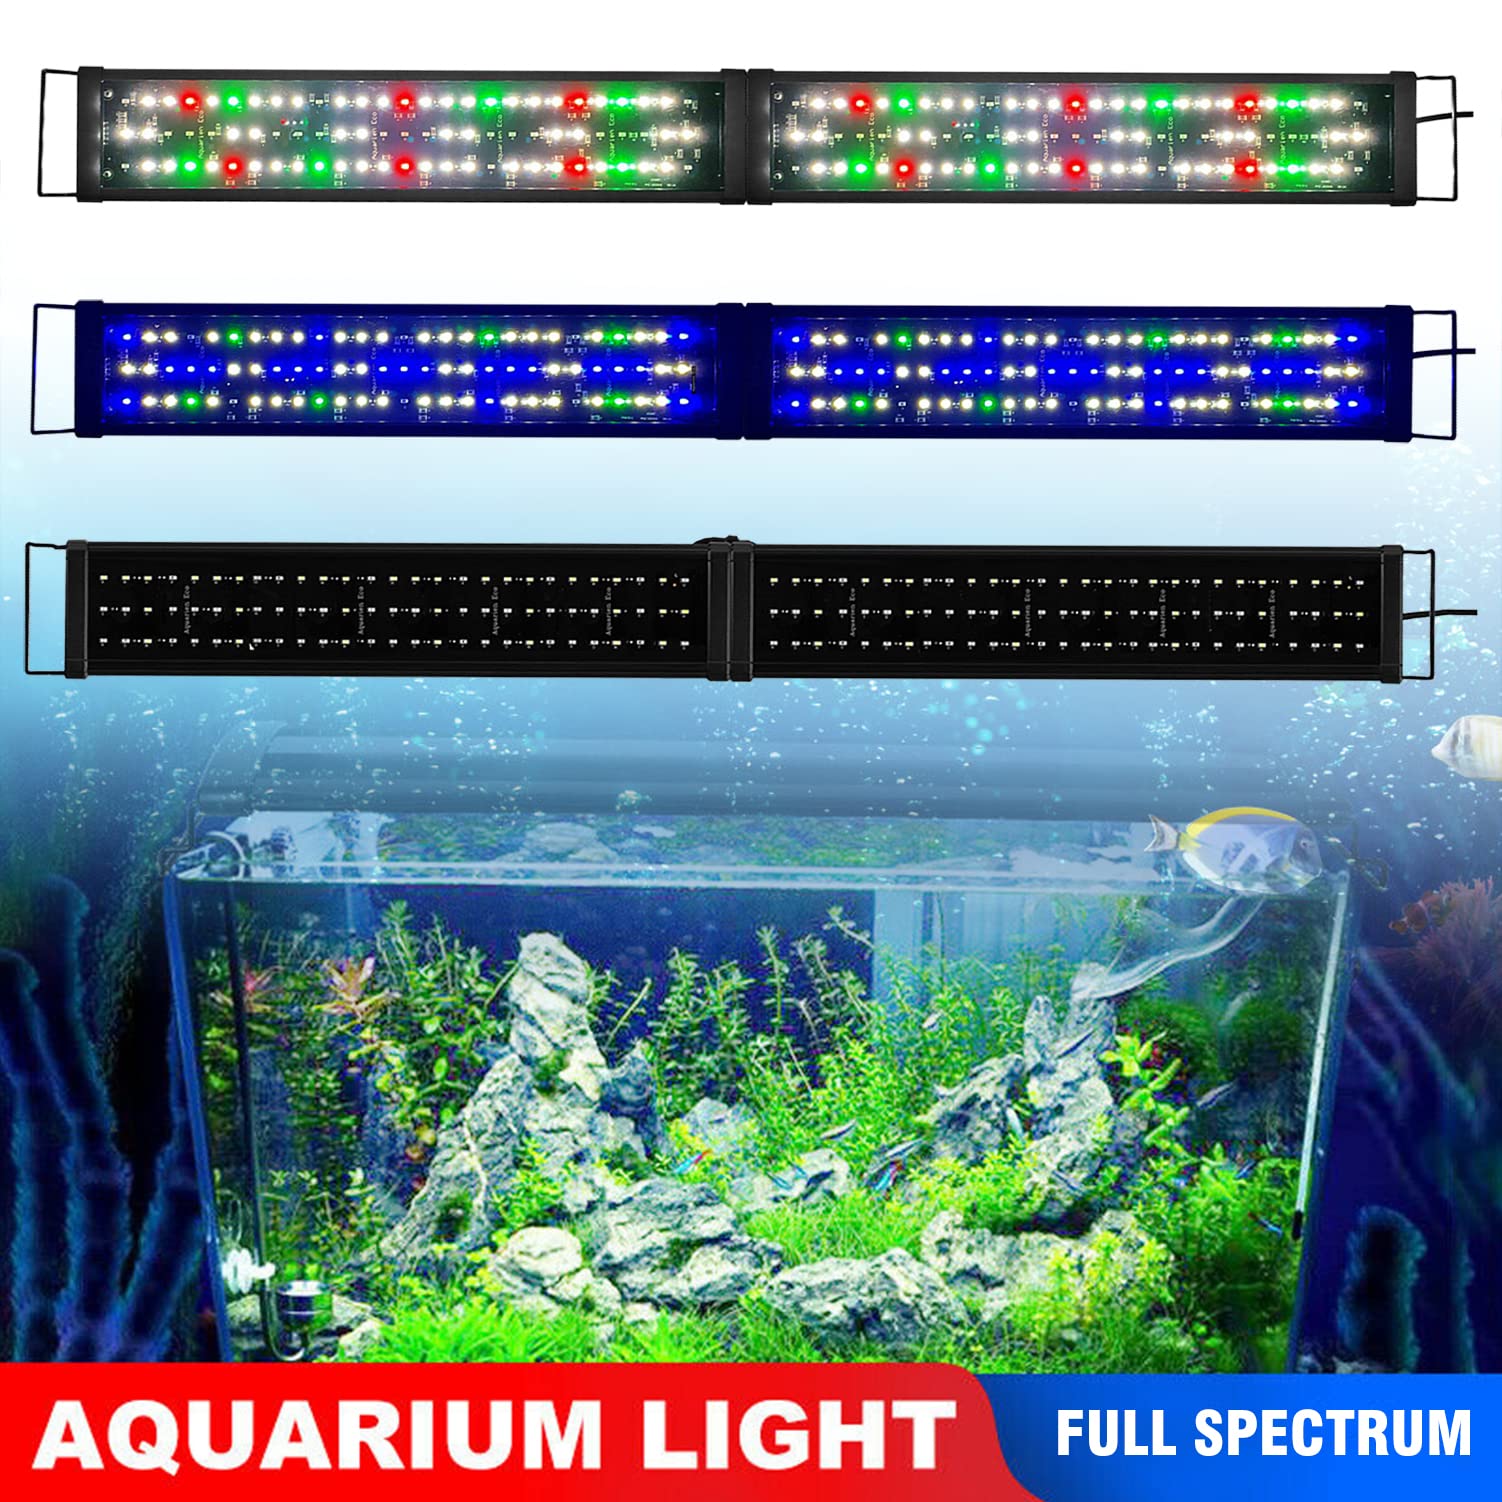 KZKR Remote Control LED Aquarium Light: Upgraded 48-60 inch